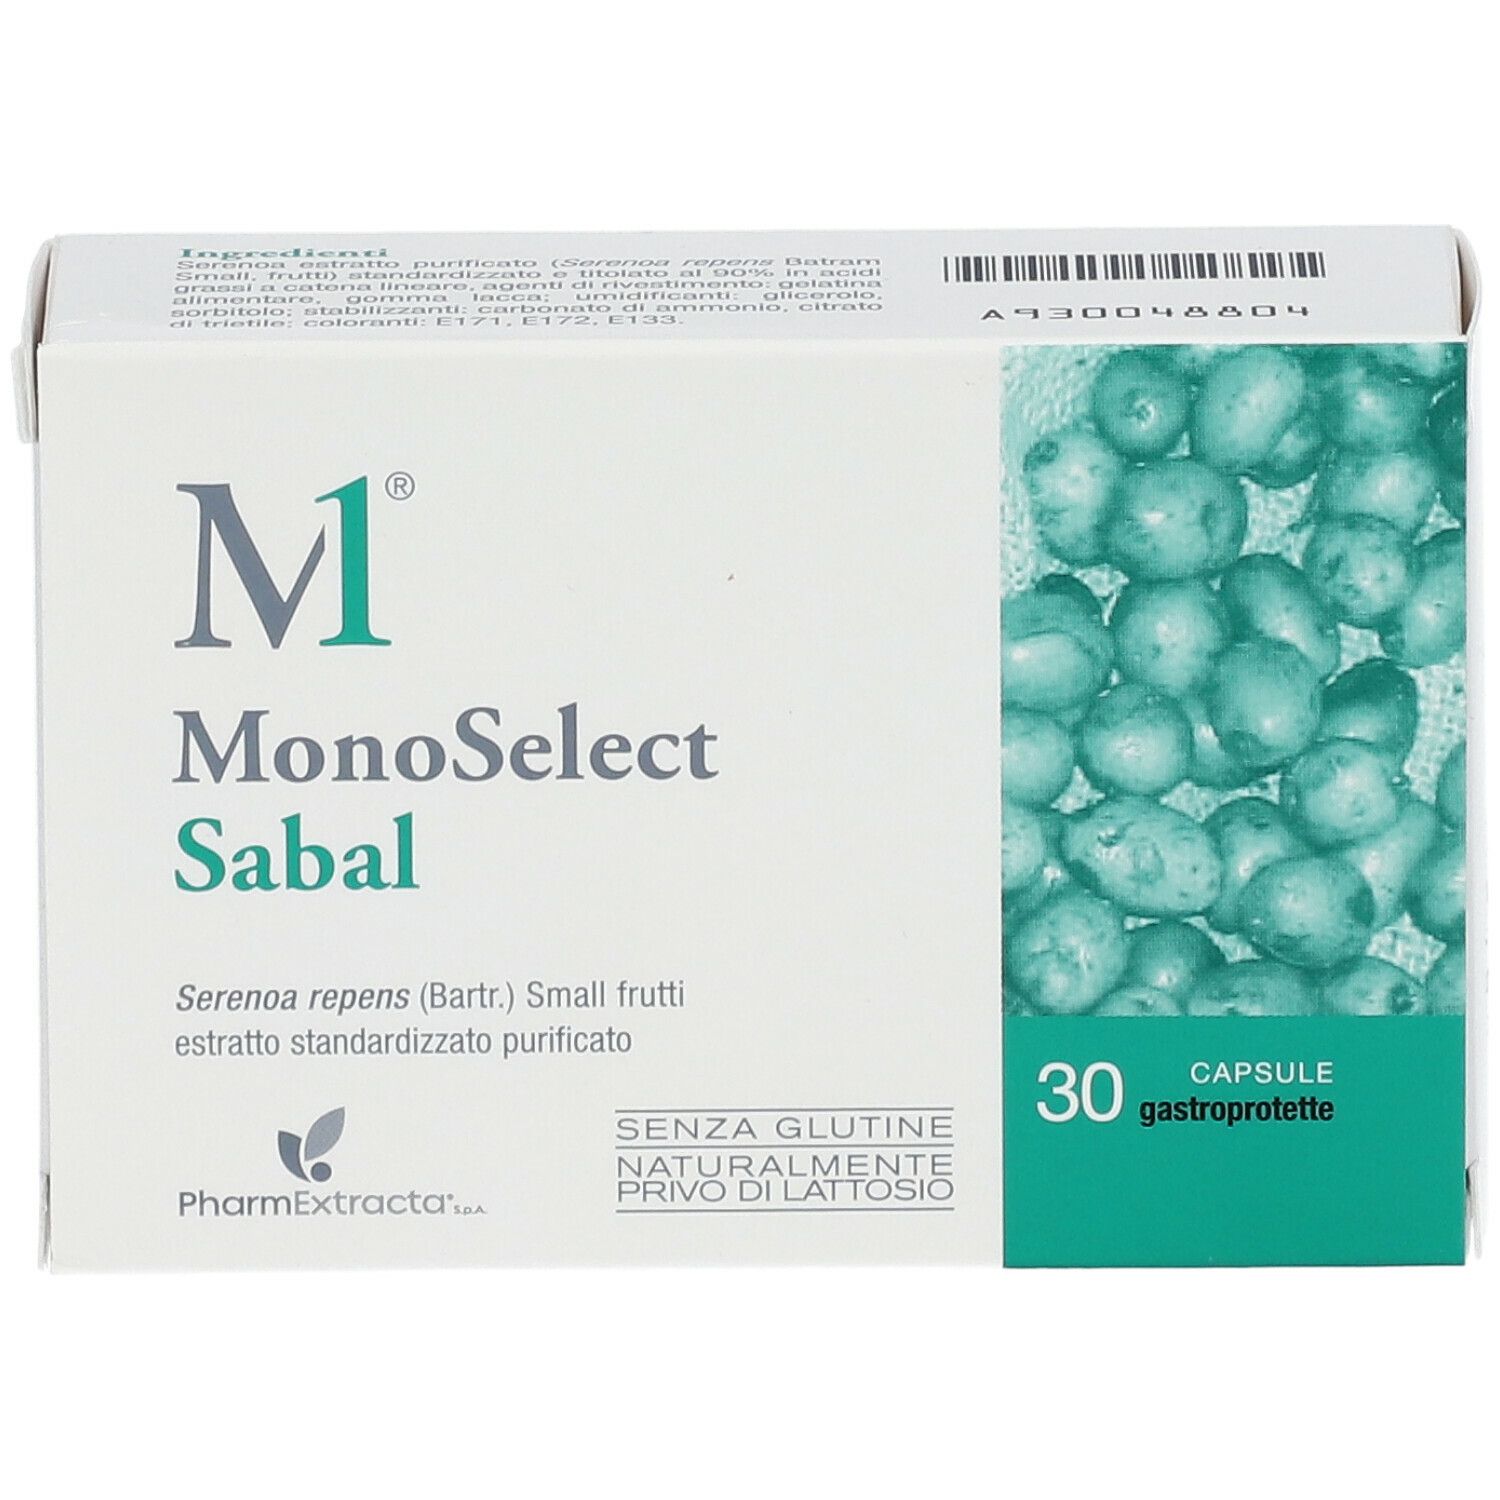 Monoselect® Sabal Capsule